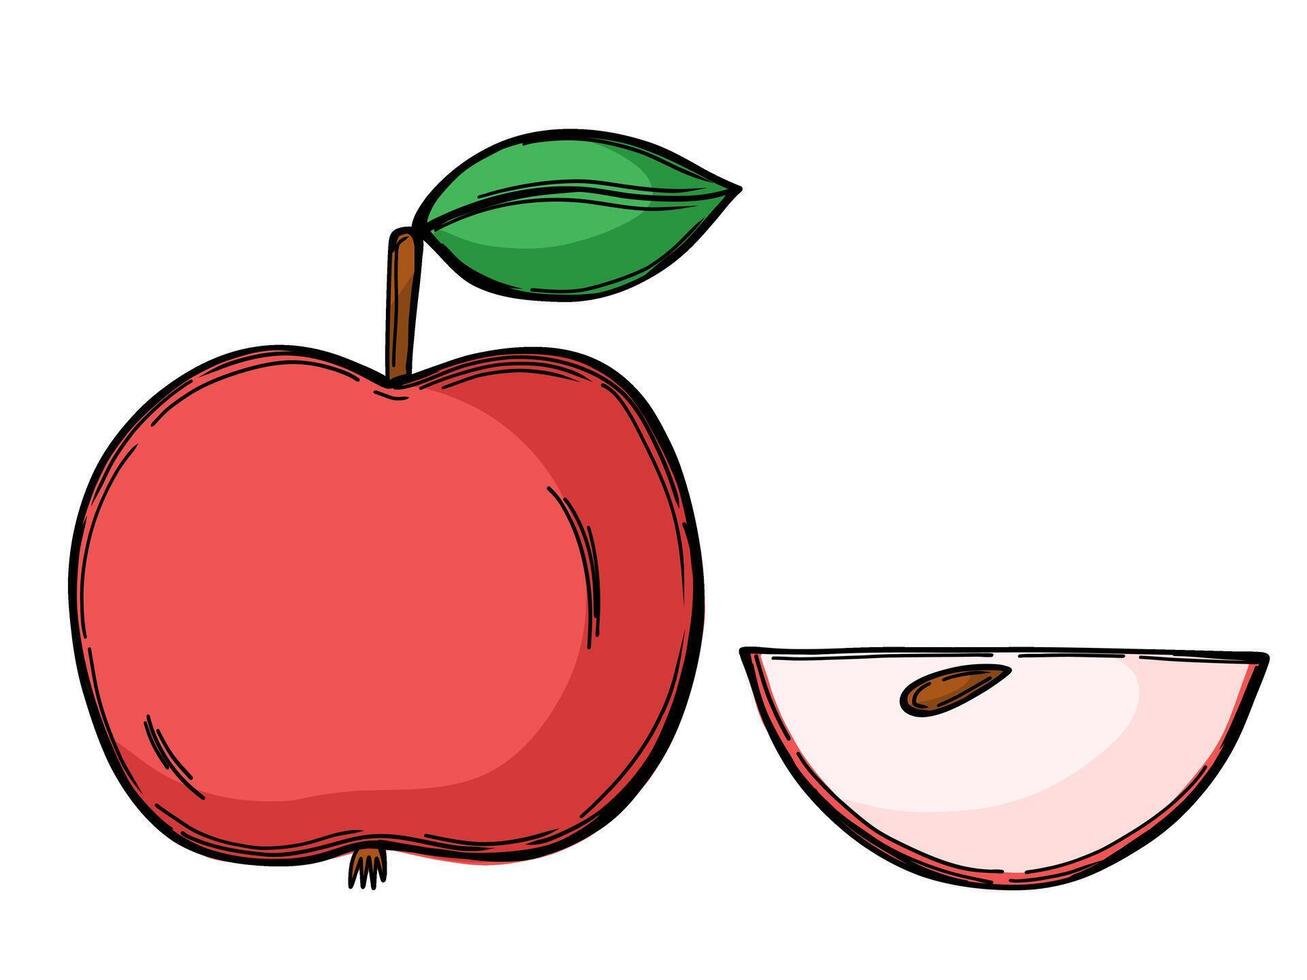 röd äpple frukt i klotter stil vektor